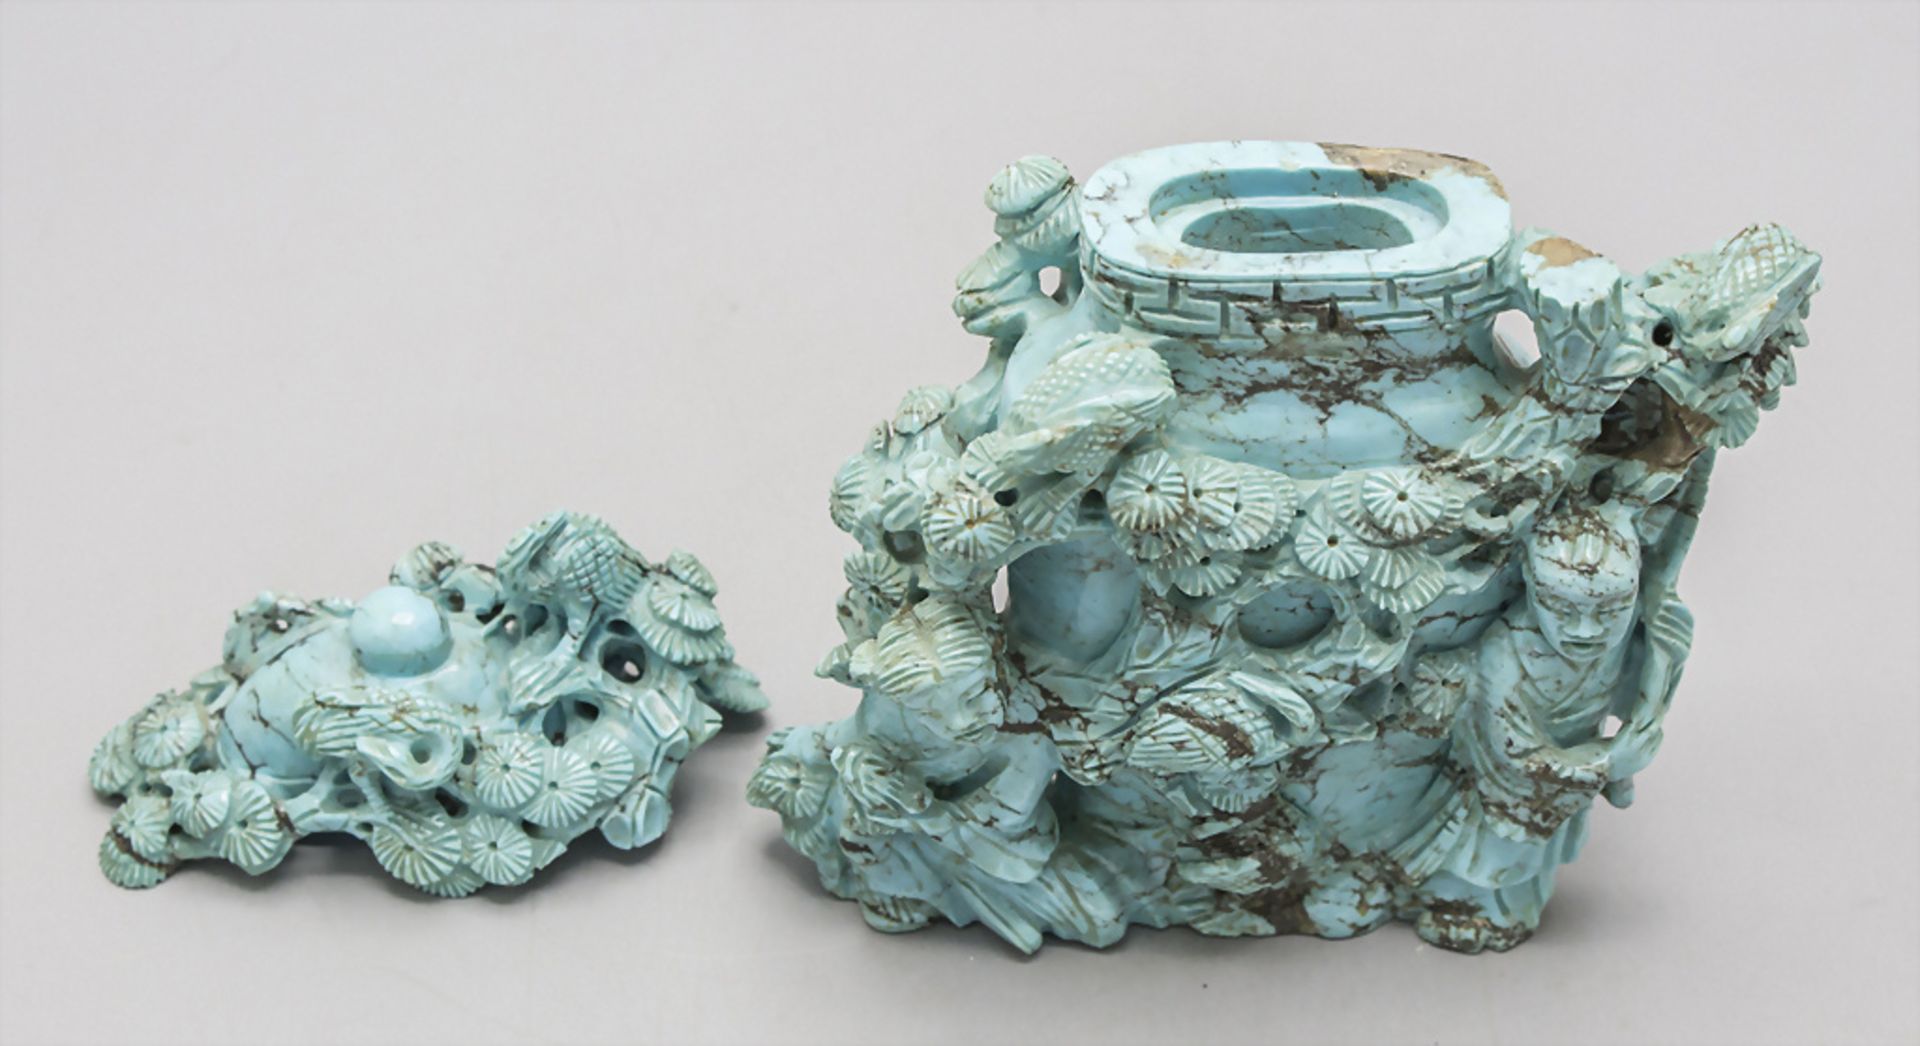 Türkis-Deckelvase / A turquoise lidded vase, China, späte Qing-Dynastie (1644-1911) - Bild 5 aus 7